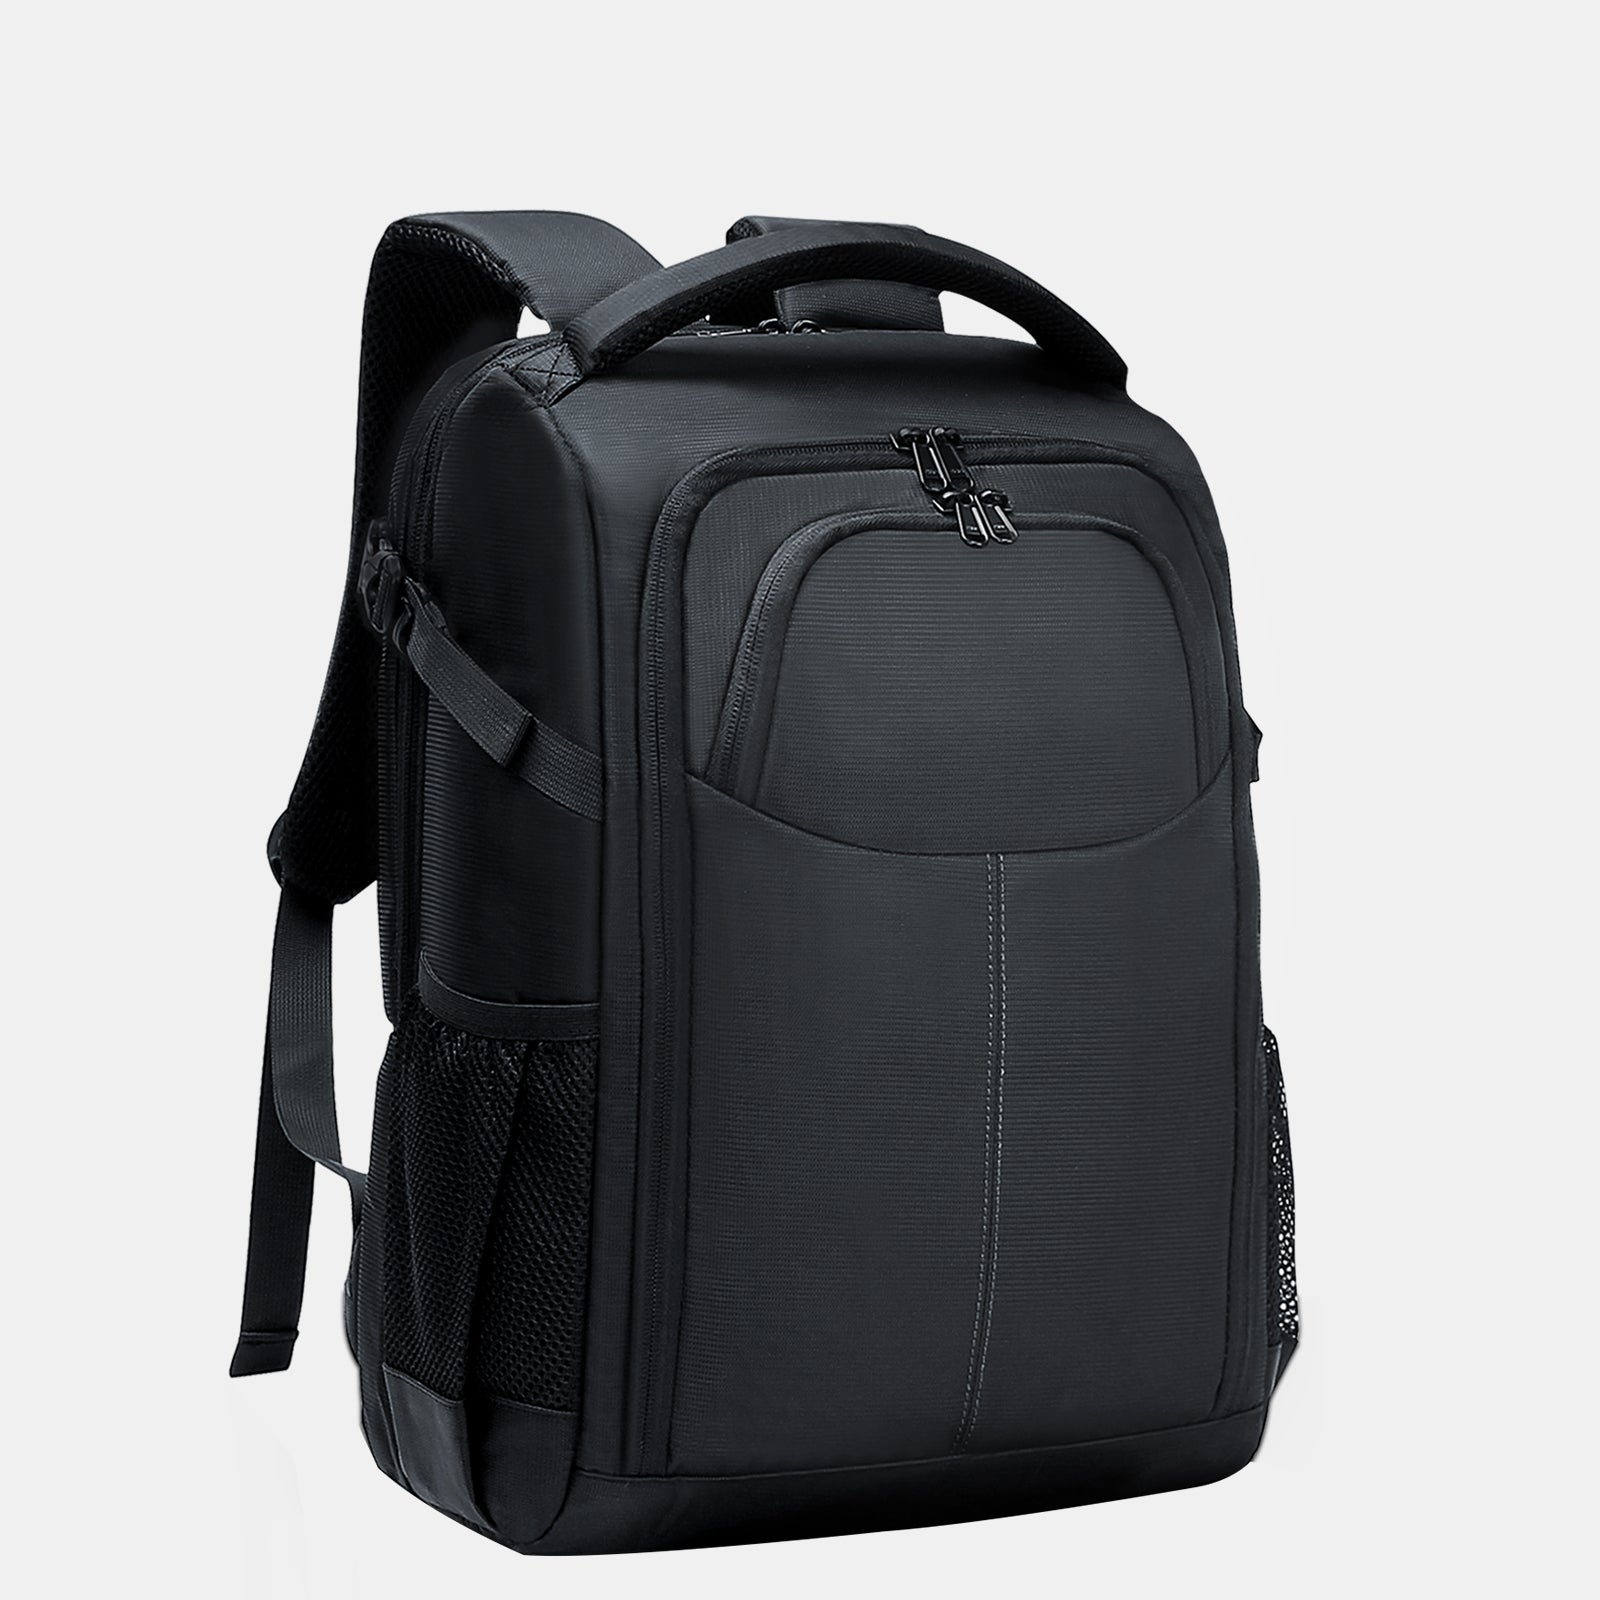 Bertasche Travel Camera 15.6 Inch Laptop Backpack